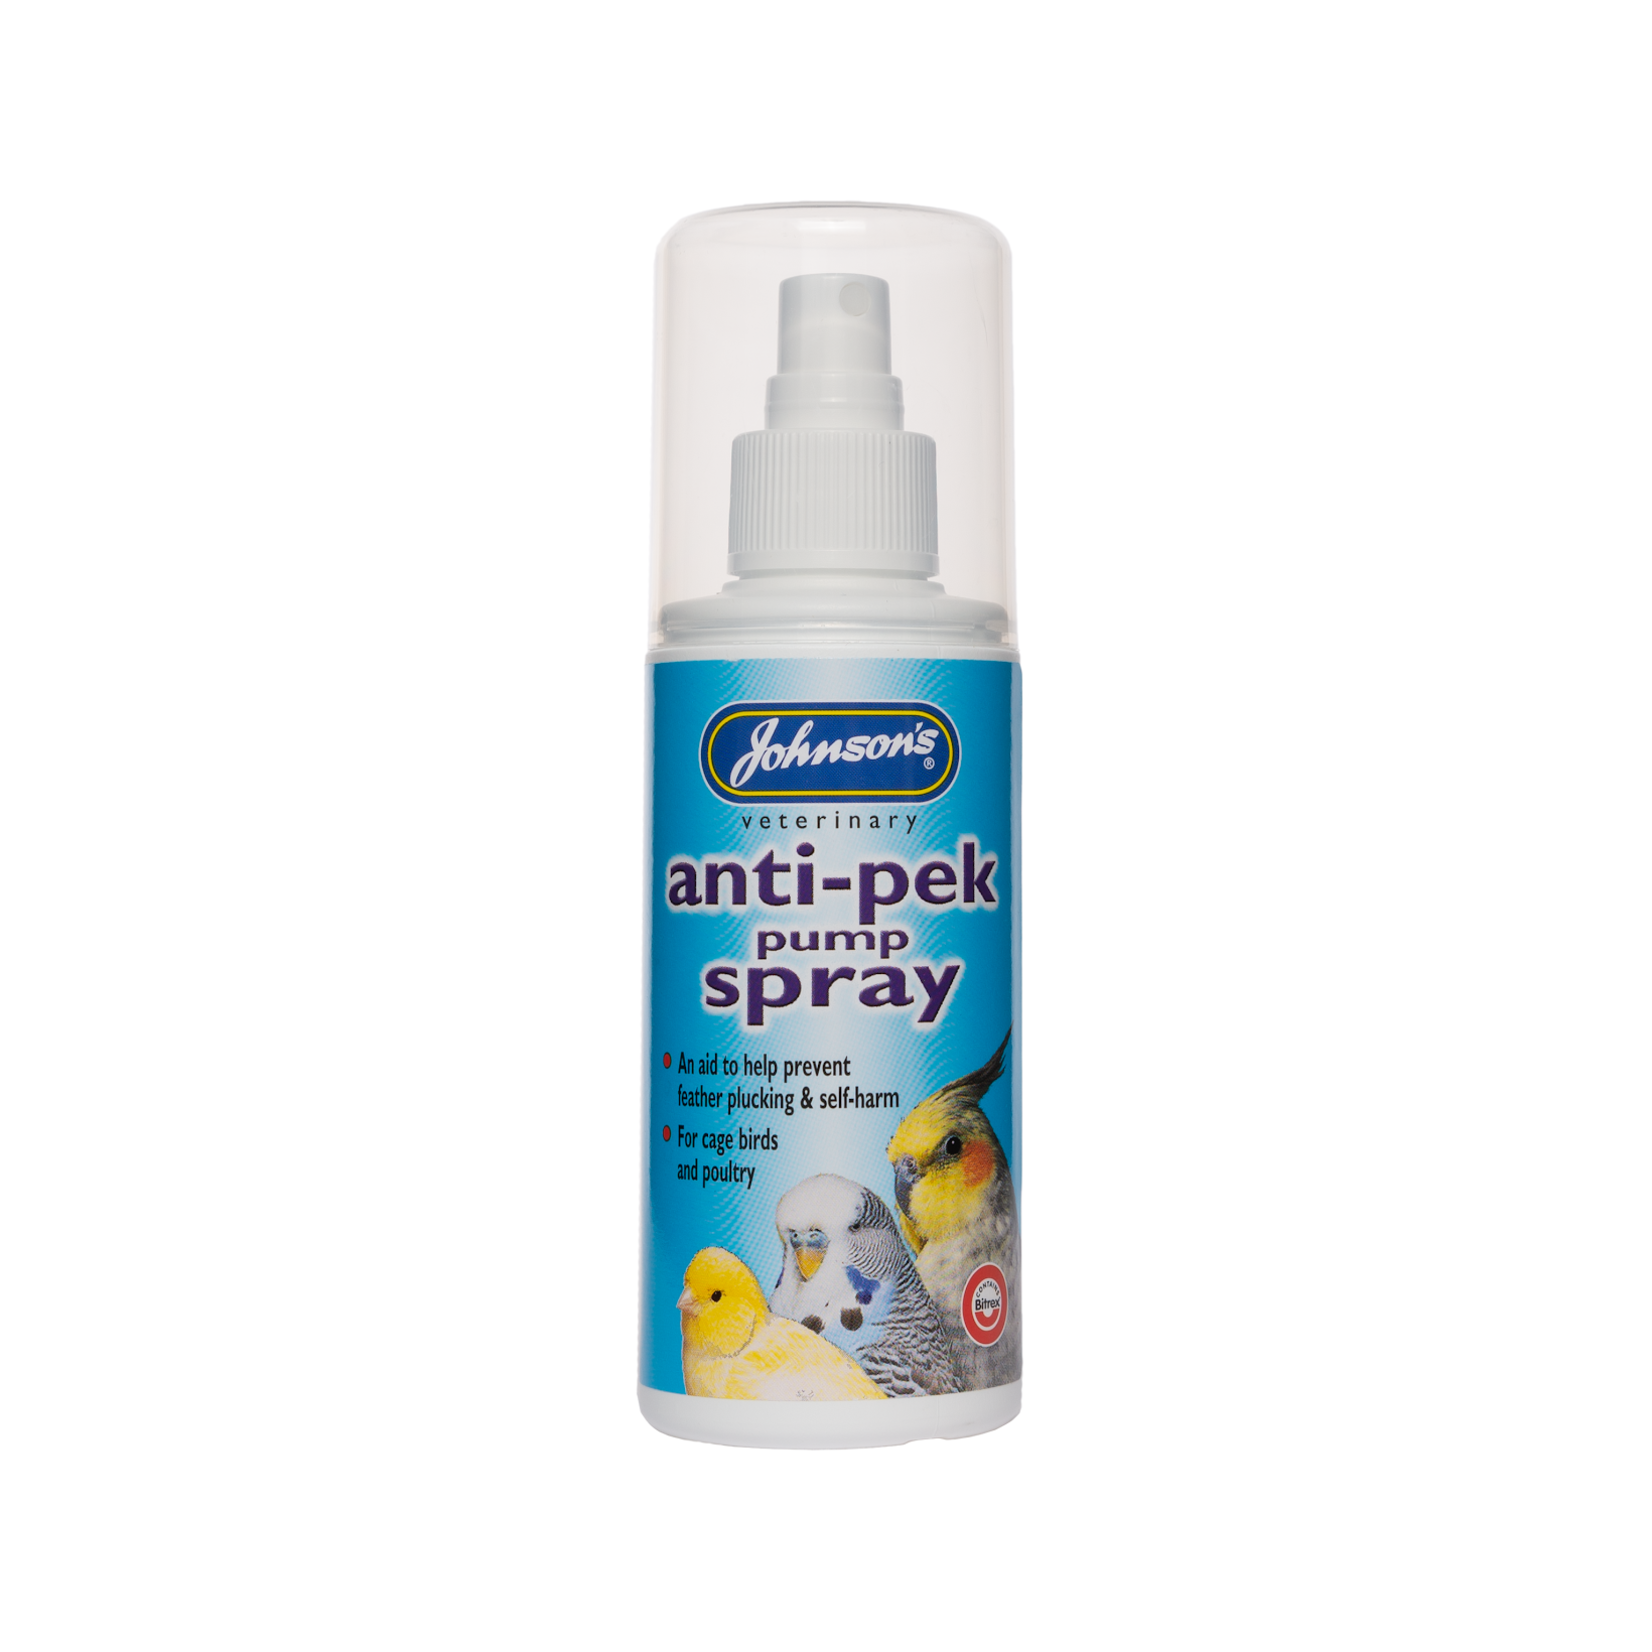 Johnson's Veterinary Anti-Pek Pump Spray for Cage Birds & Poultry, 100ml